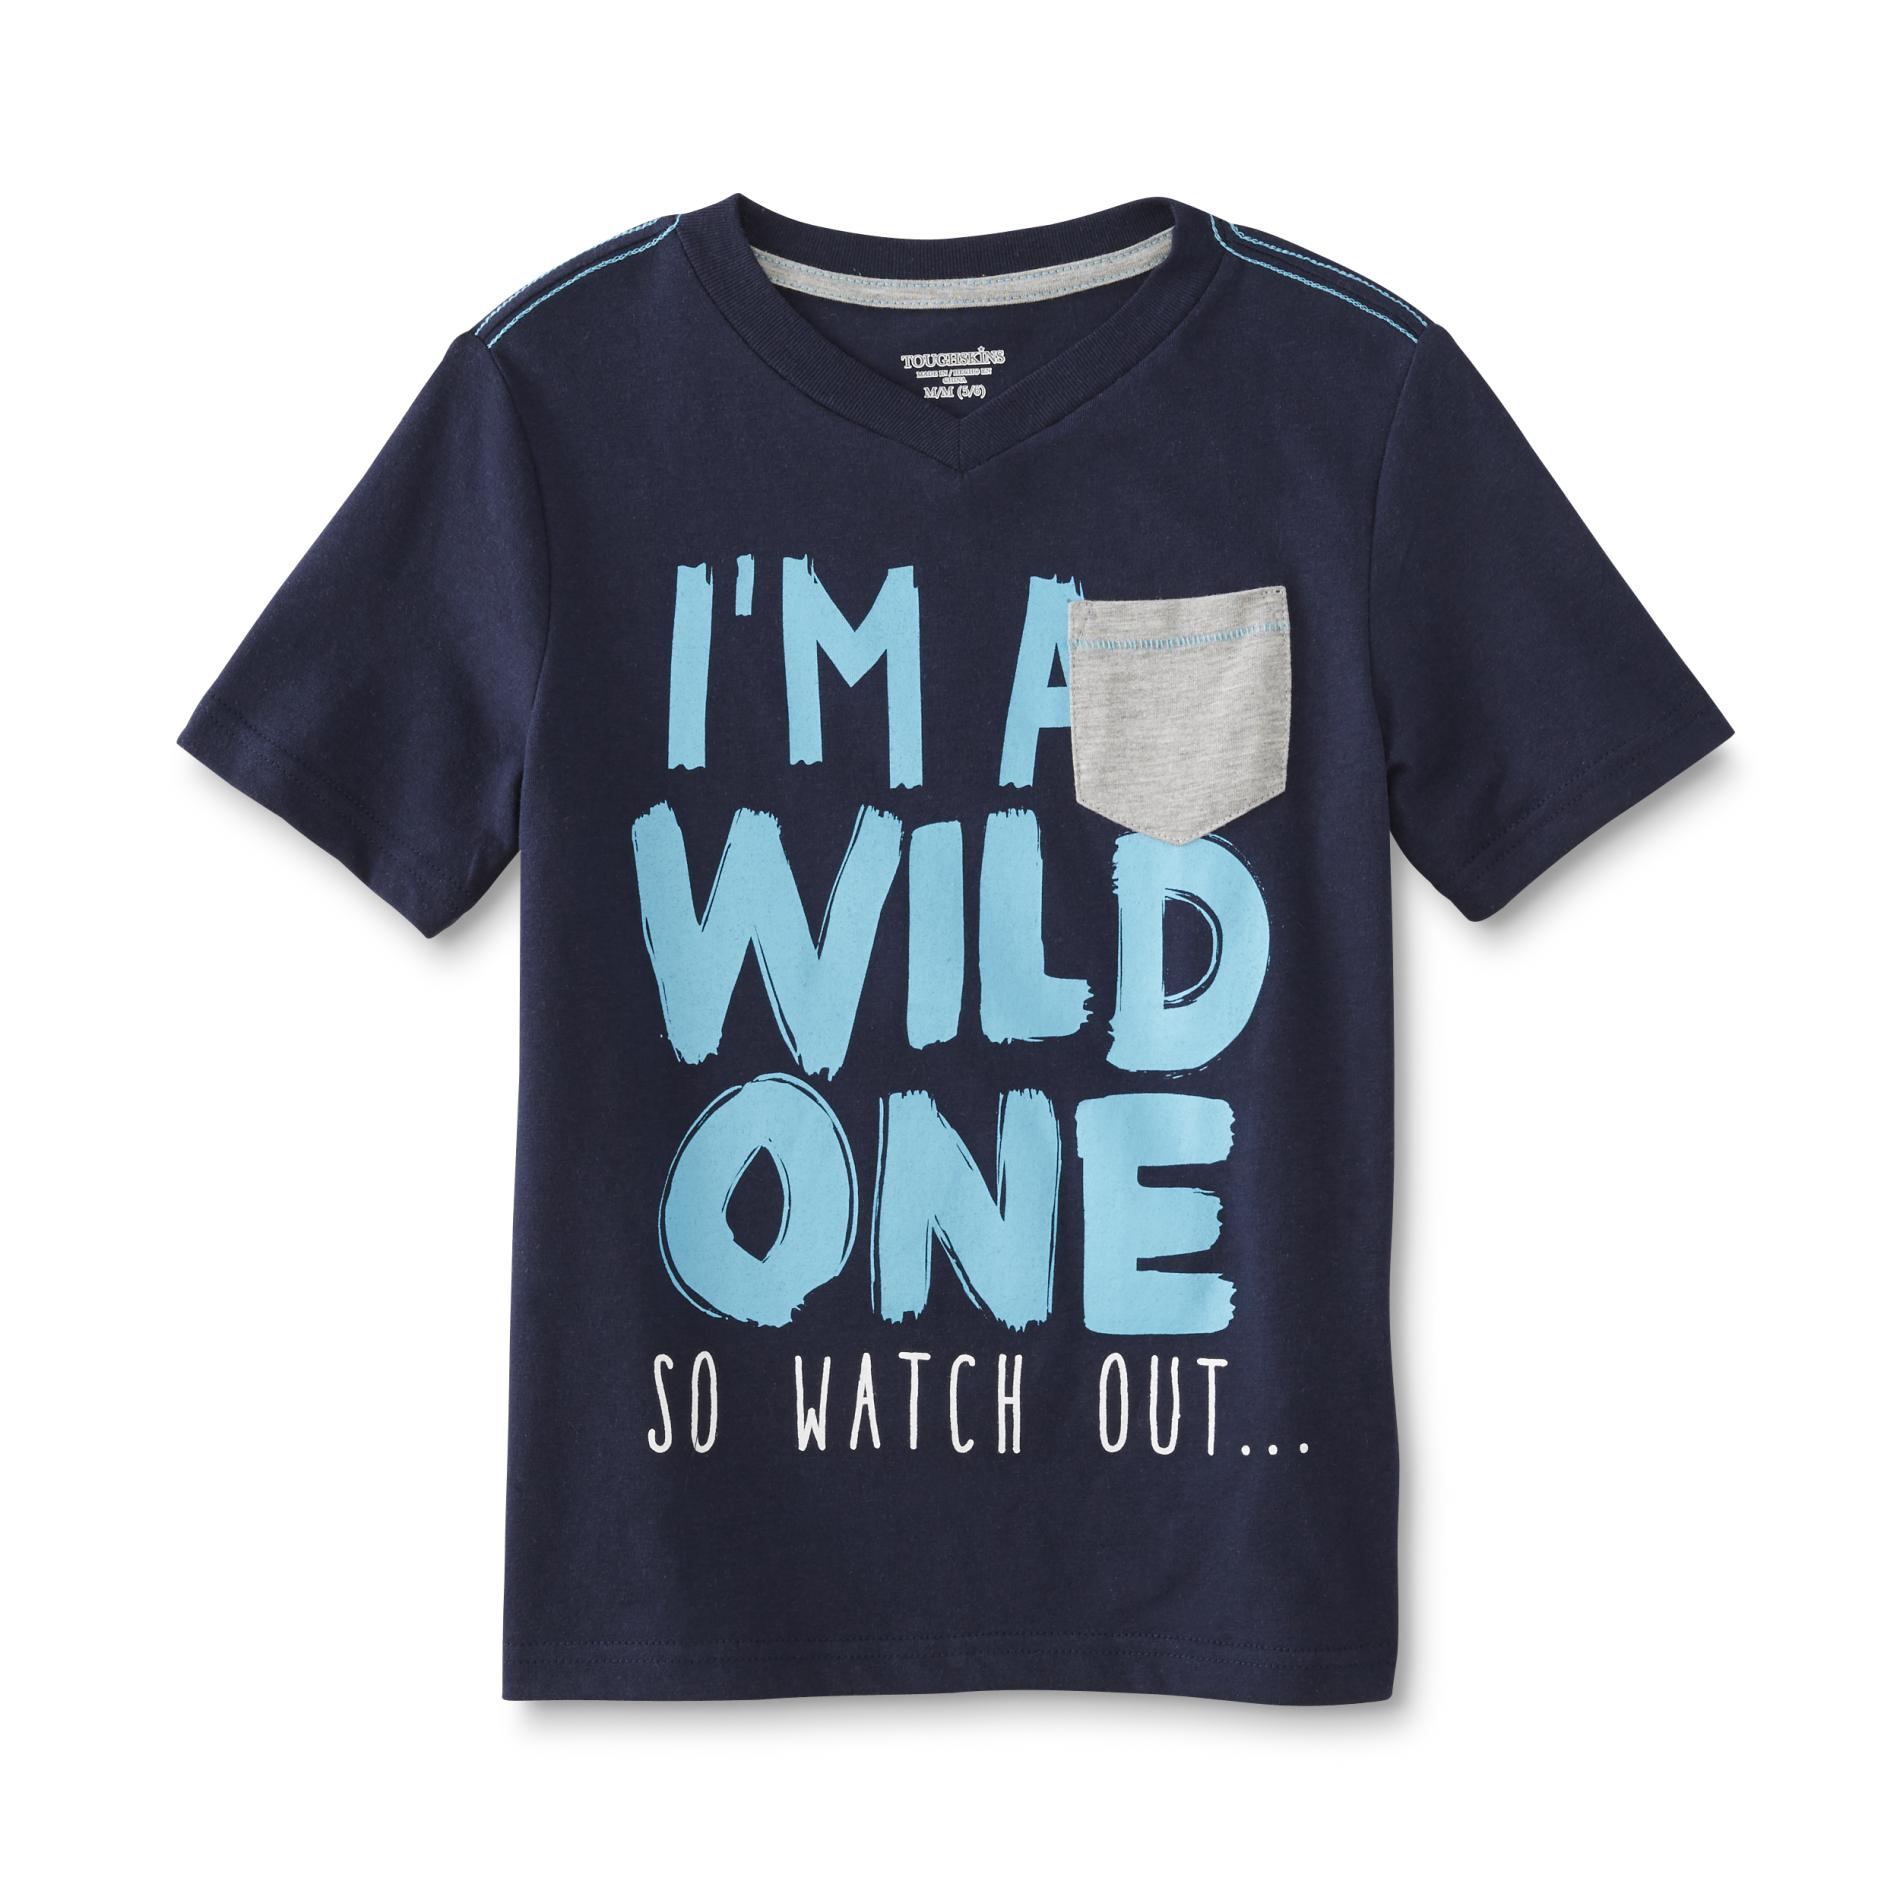 Toughskins Boys' V-Neck Pocket T-Shirt - Wild One